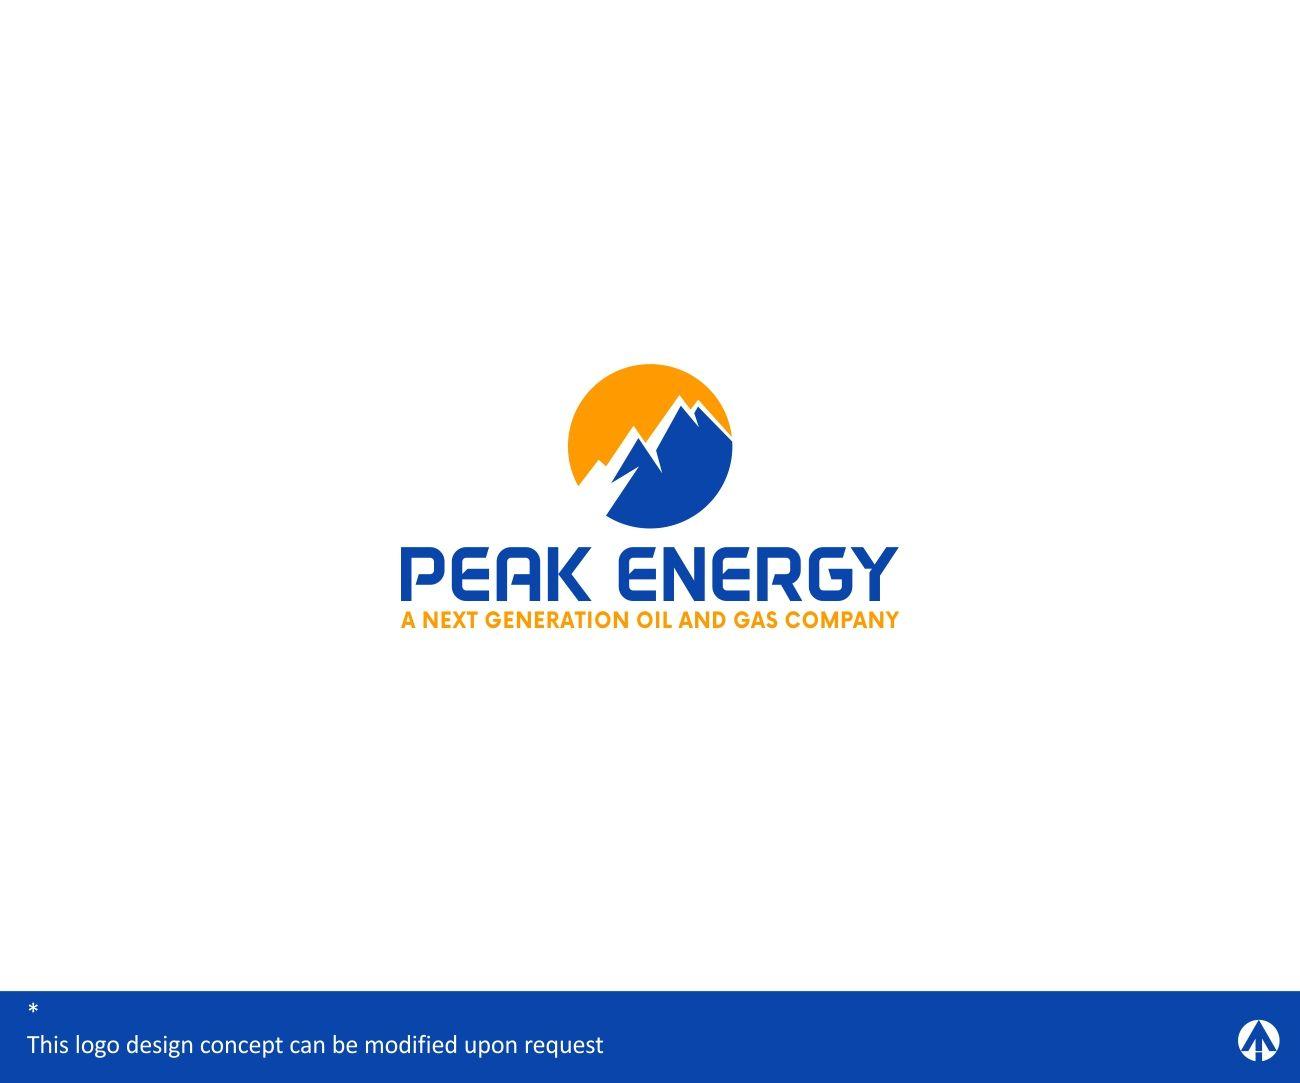 Energy Company Logo - Modern, Professional, Gas Company Logo Design for PEAK ENERGY